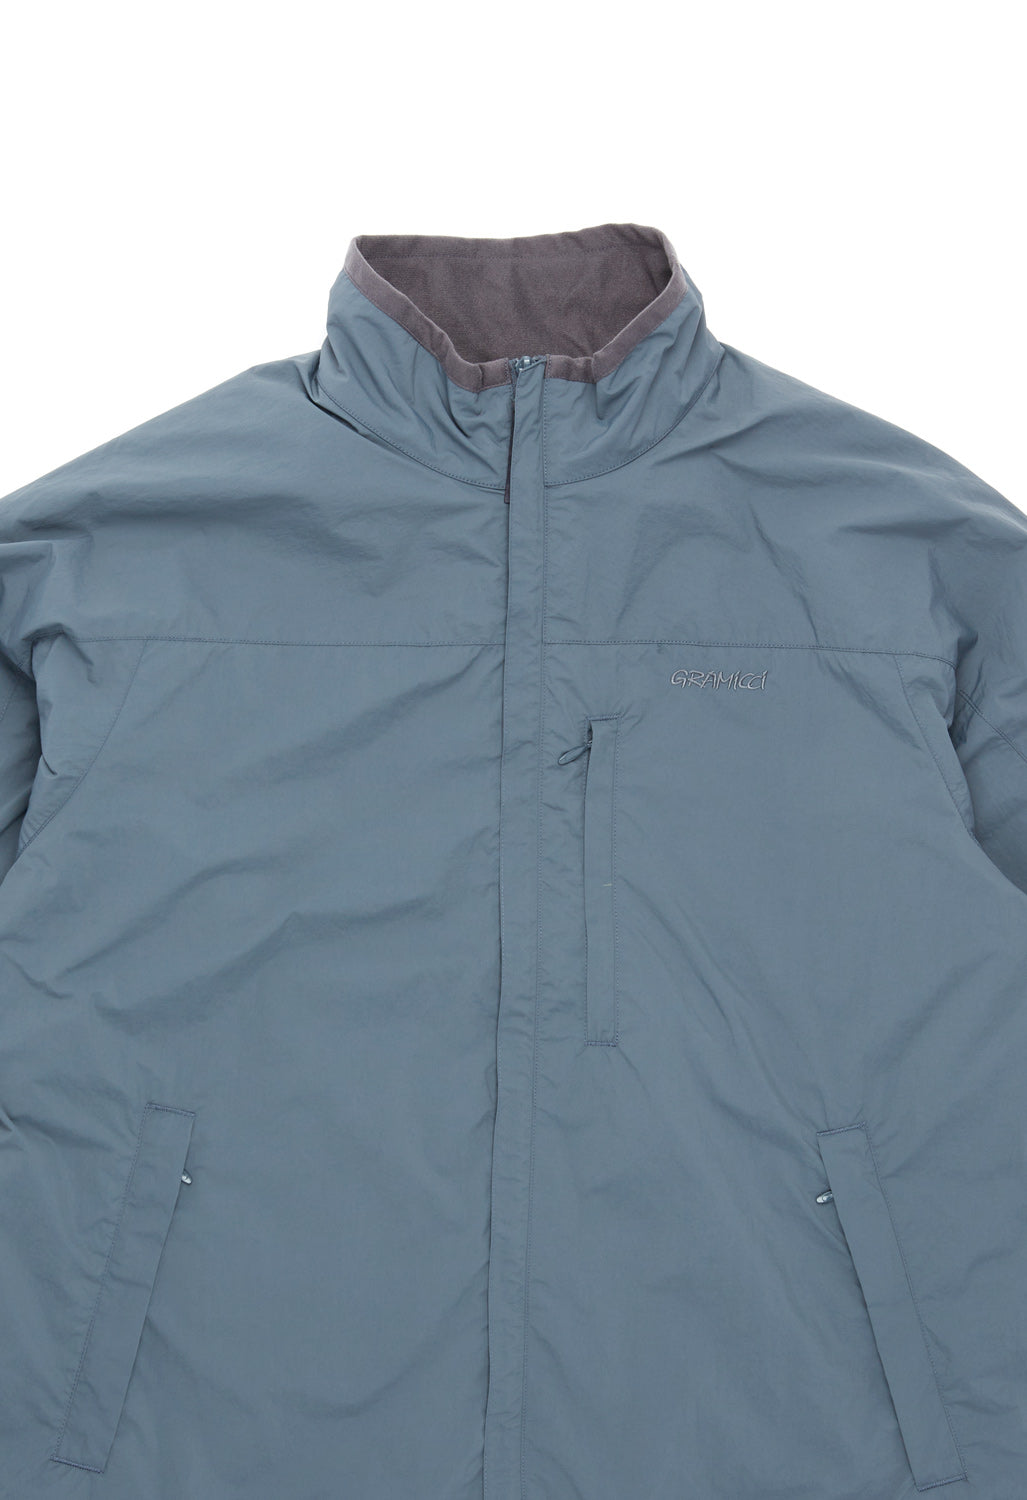 Gramicci Men's Canyon Jacket - Slate Blue